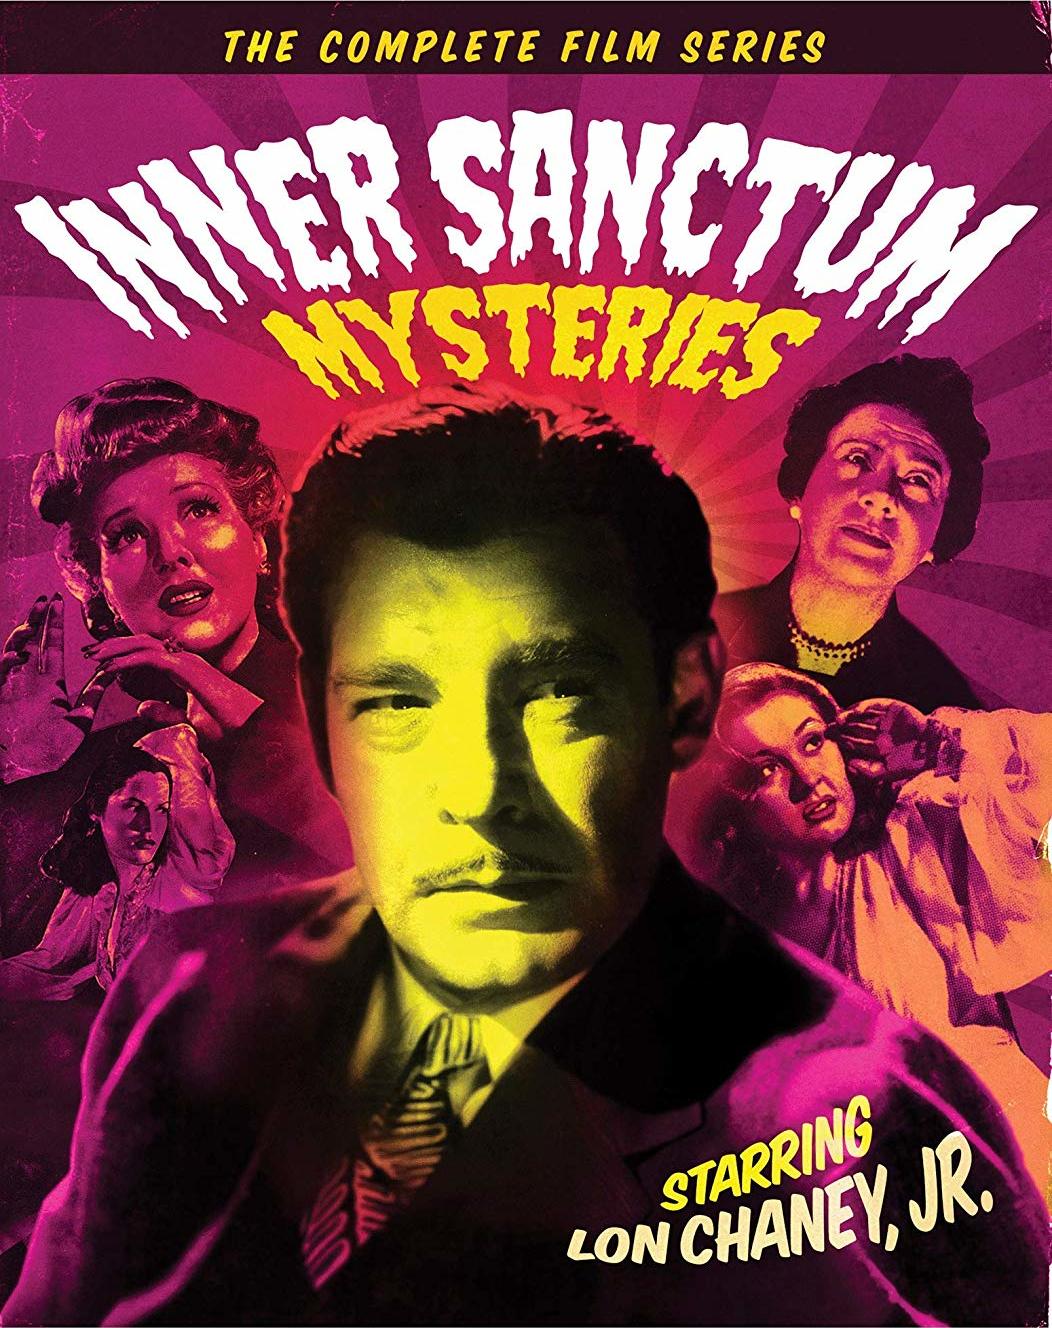 Inner Sanctum Mysteries: The Complete Film Series Blu-Ray Blu-Ray